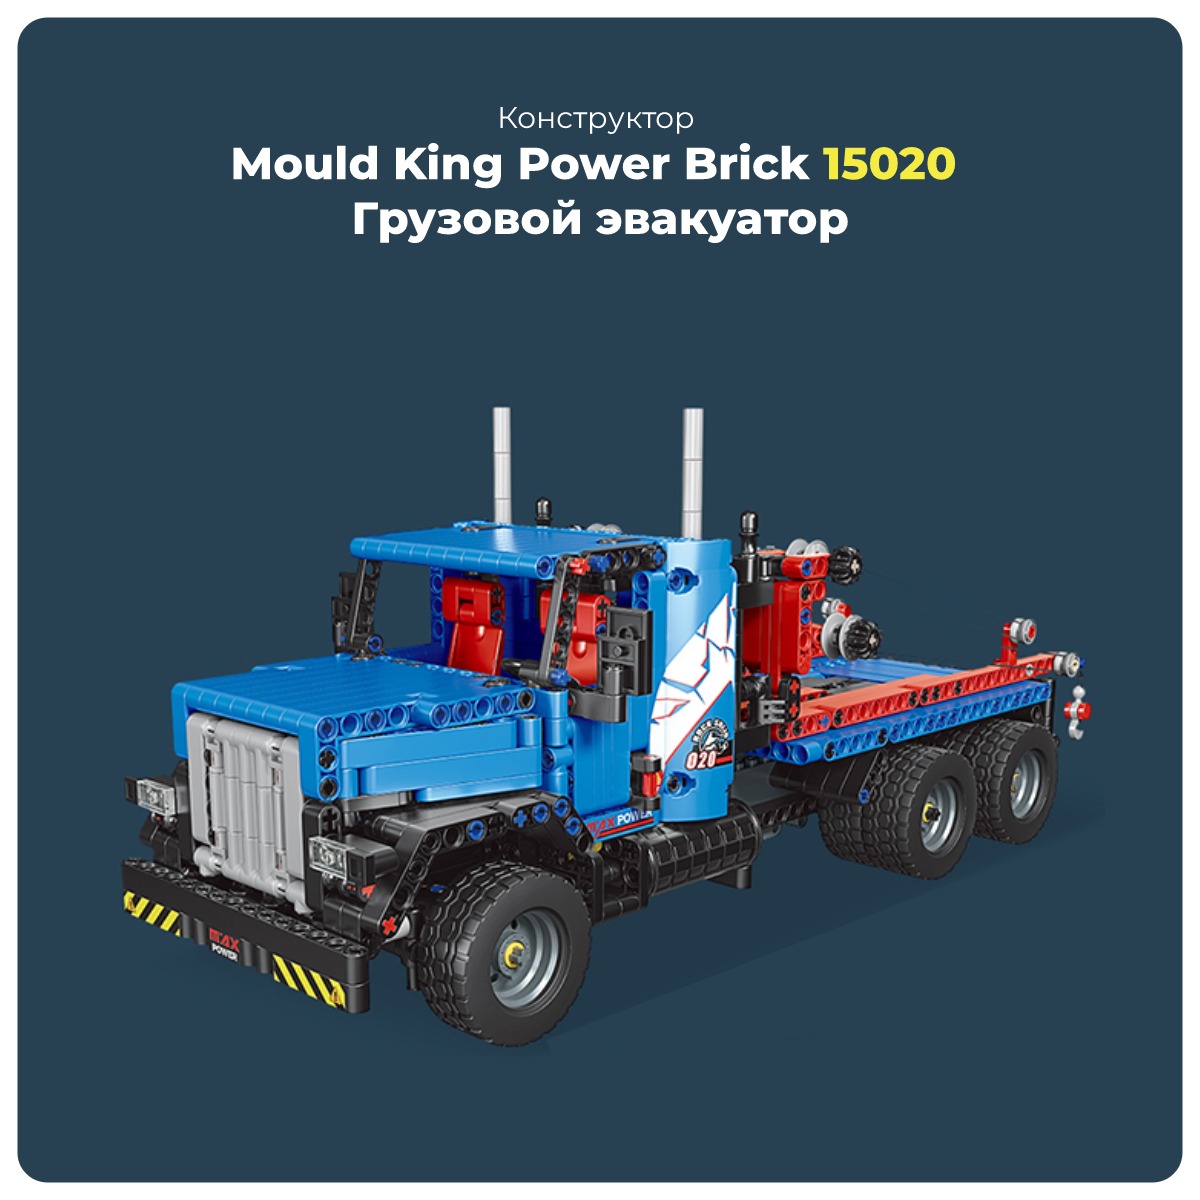 Mould-King-Power-Brick-15020-01